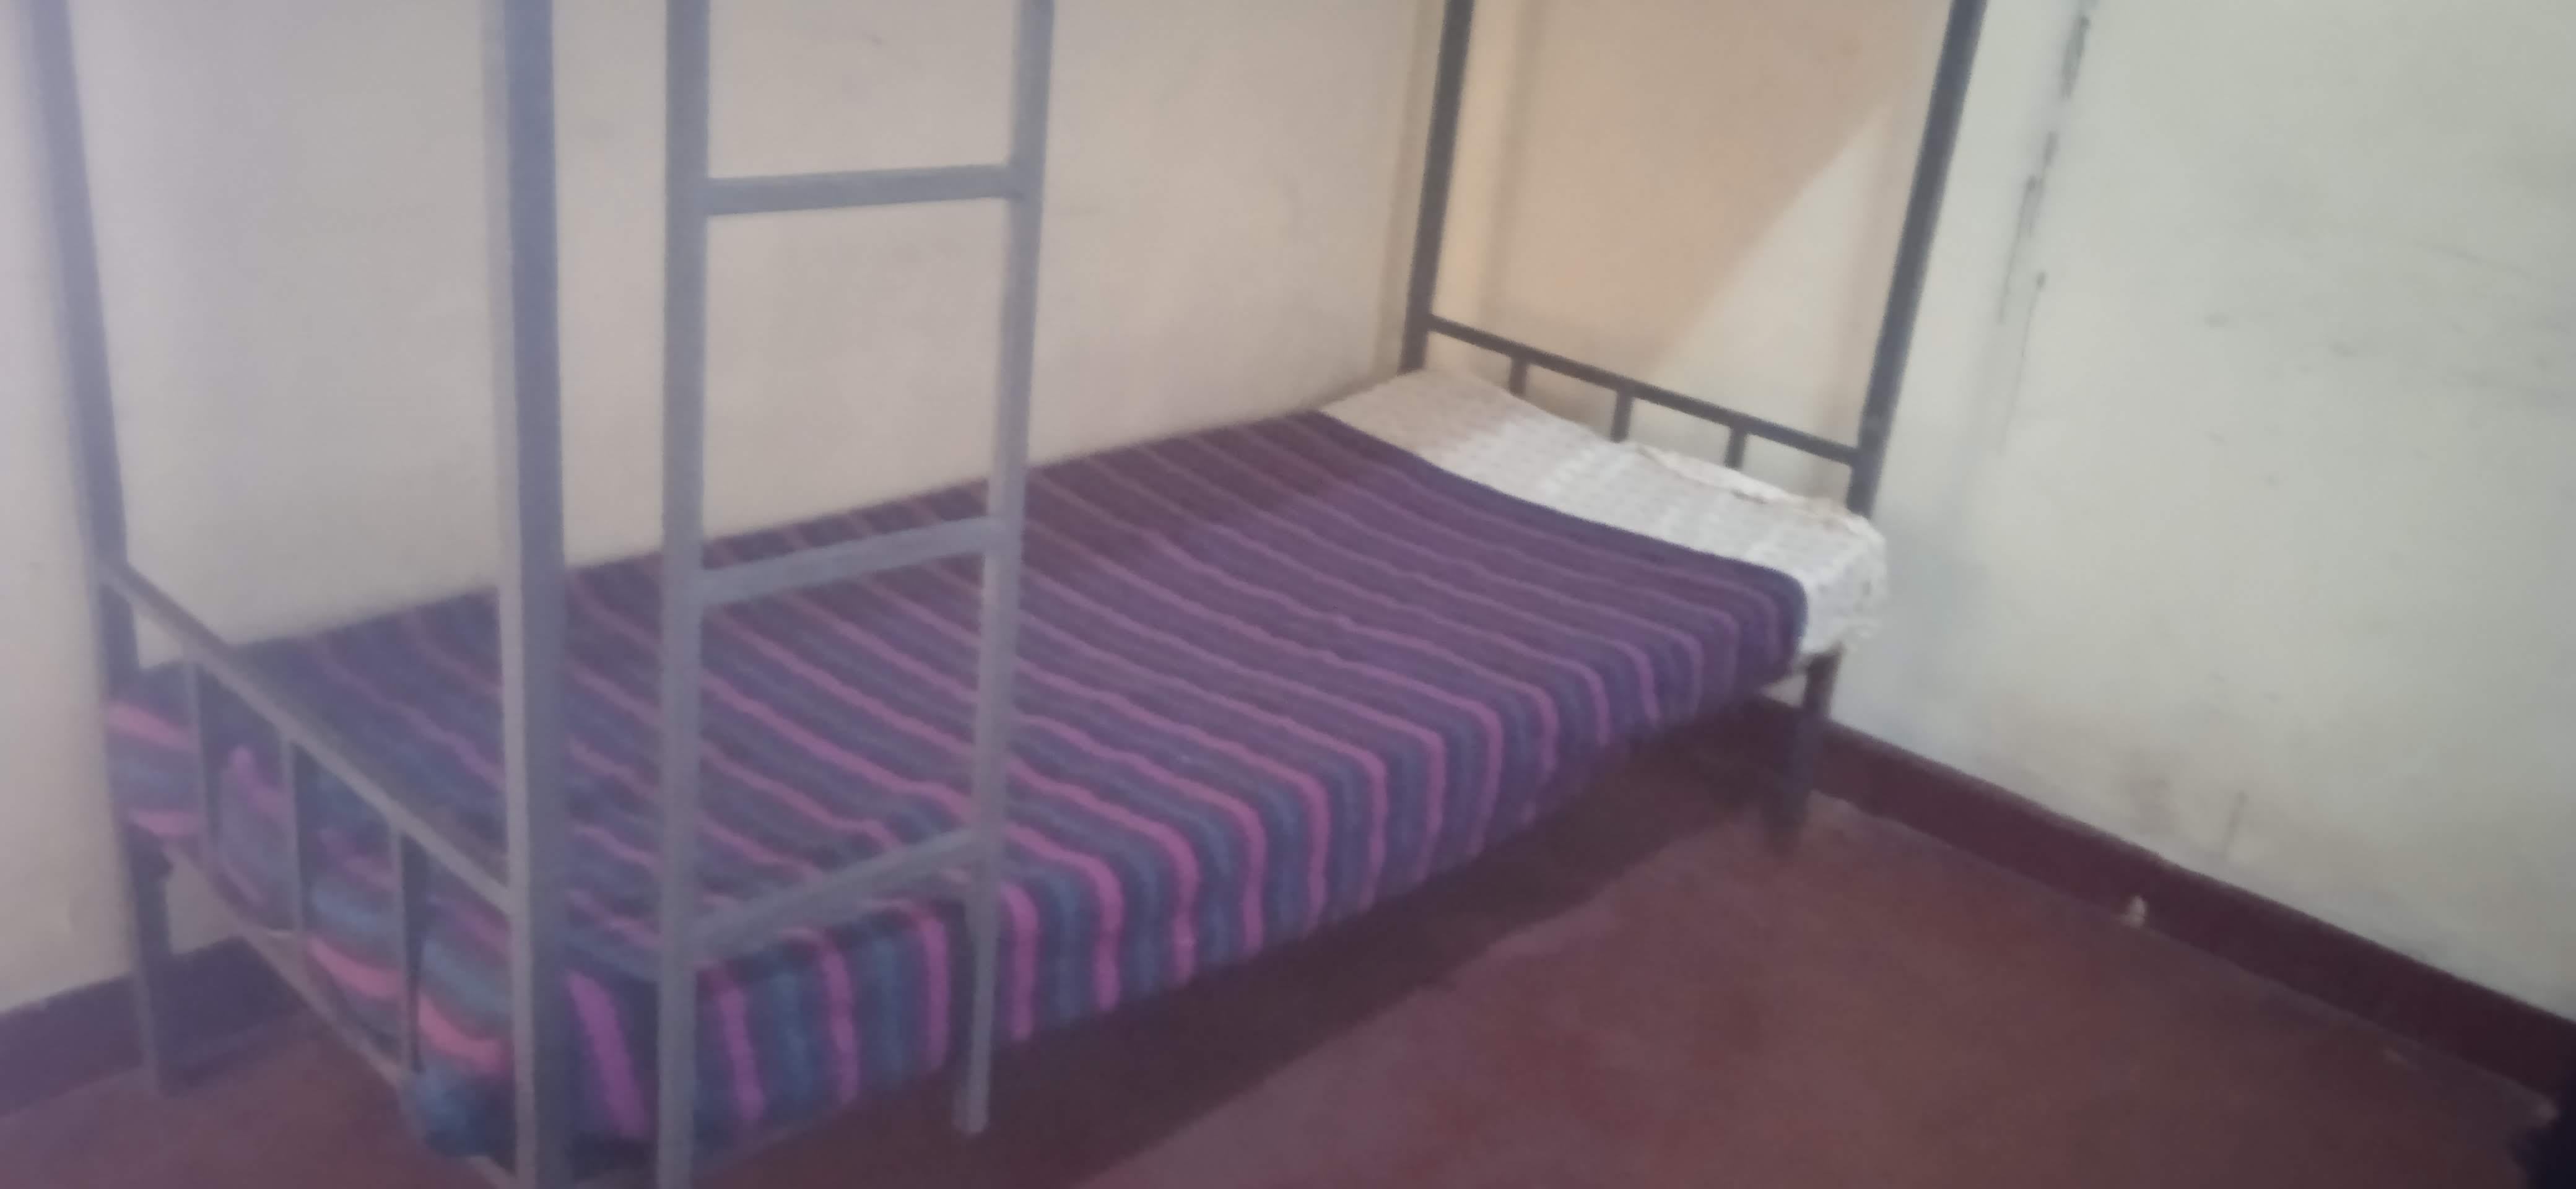 Kioneki Hostels - Nairobi